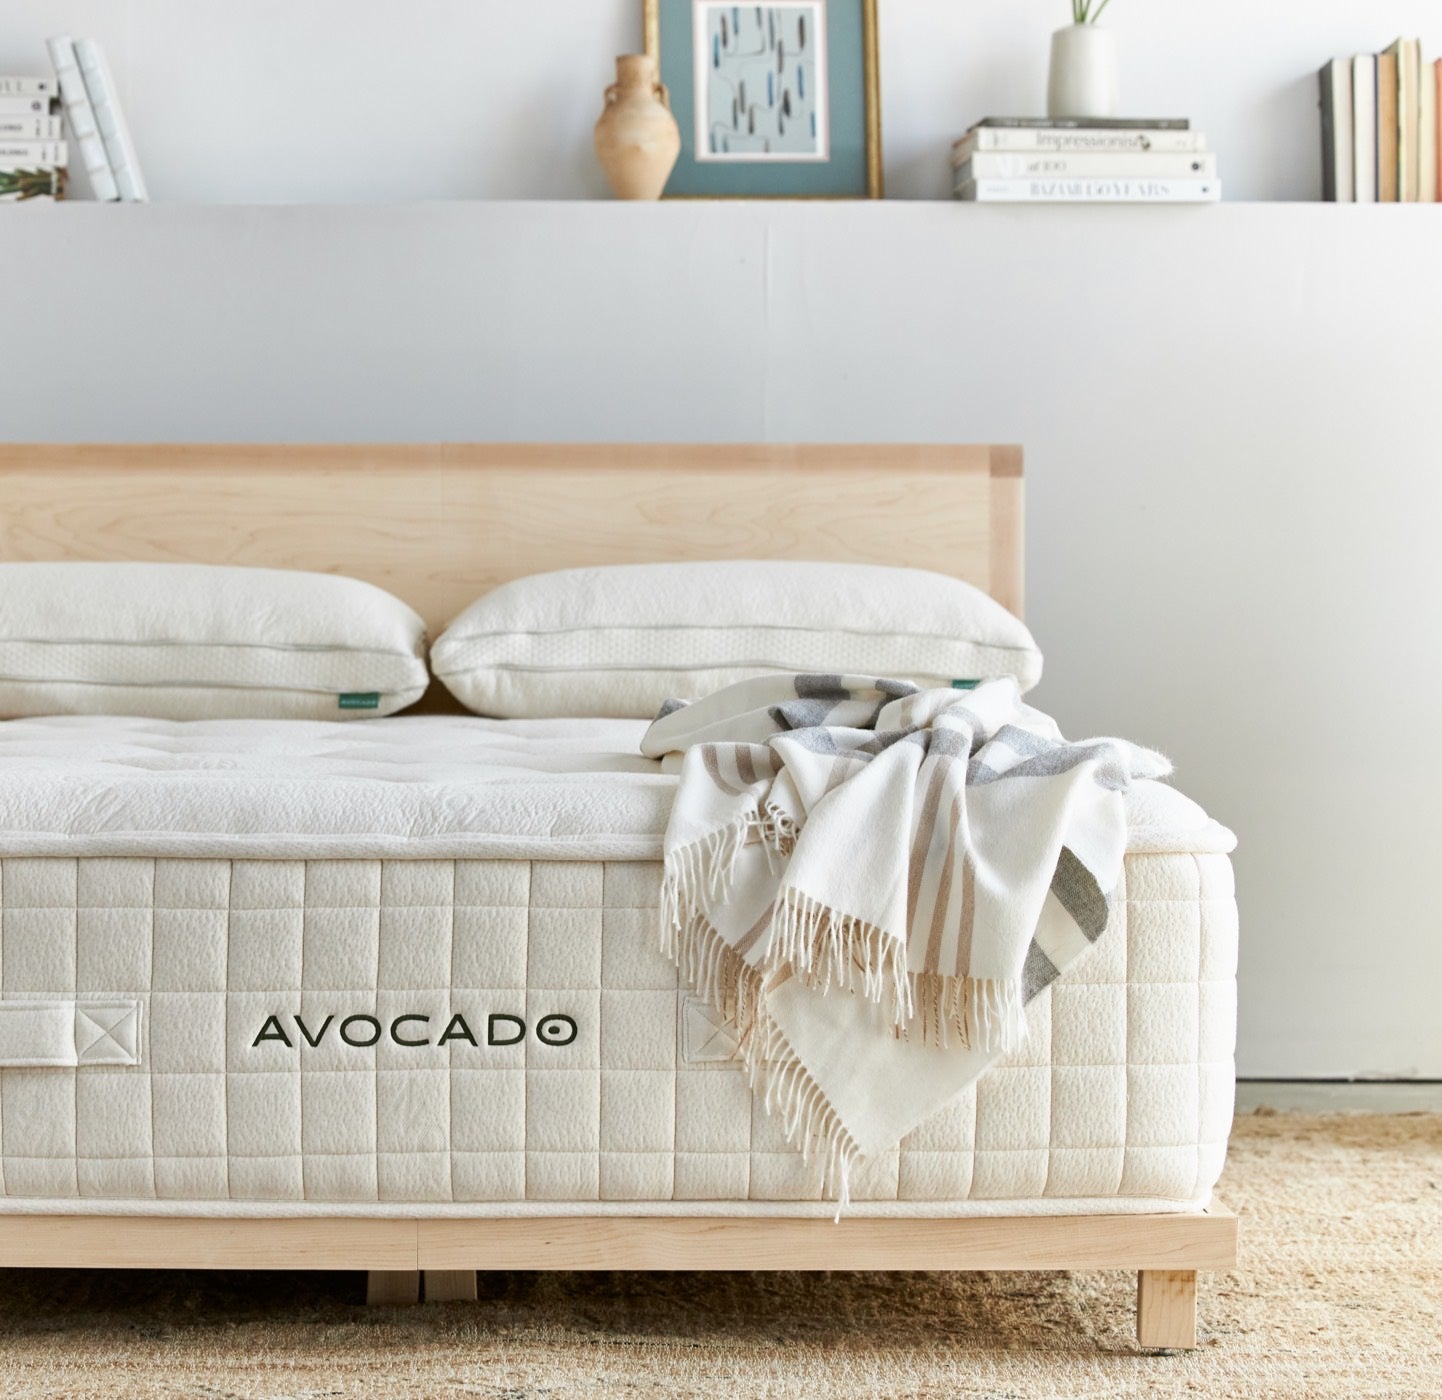 bec40ae7ea74 Avocado Luxury Plush Organic Natural Bed Platform fe6a16